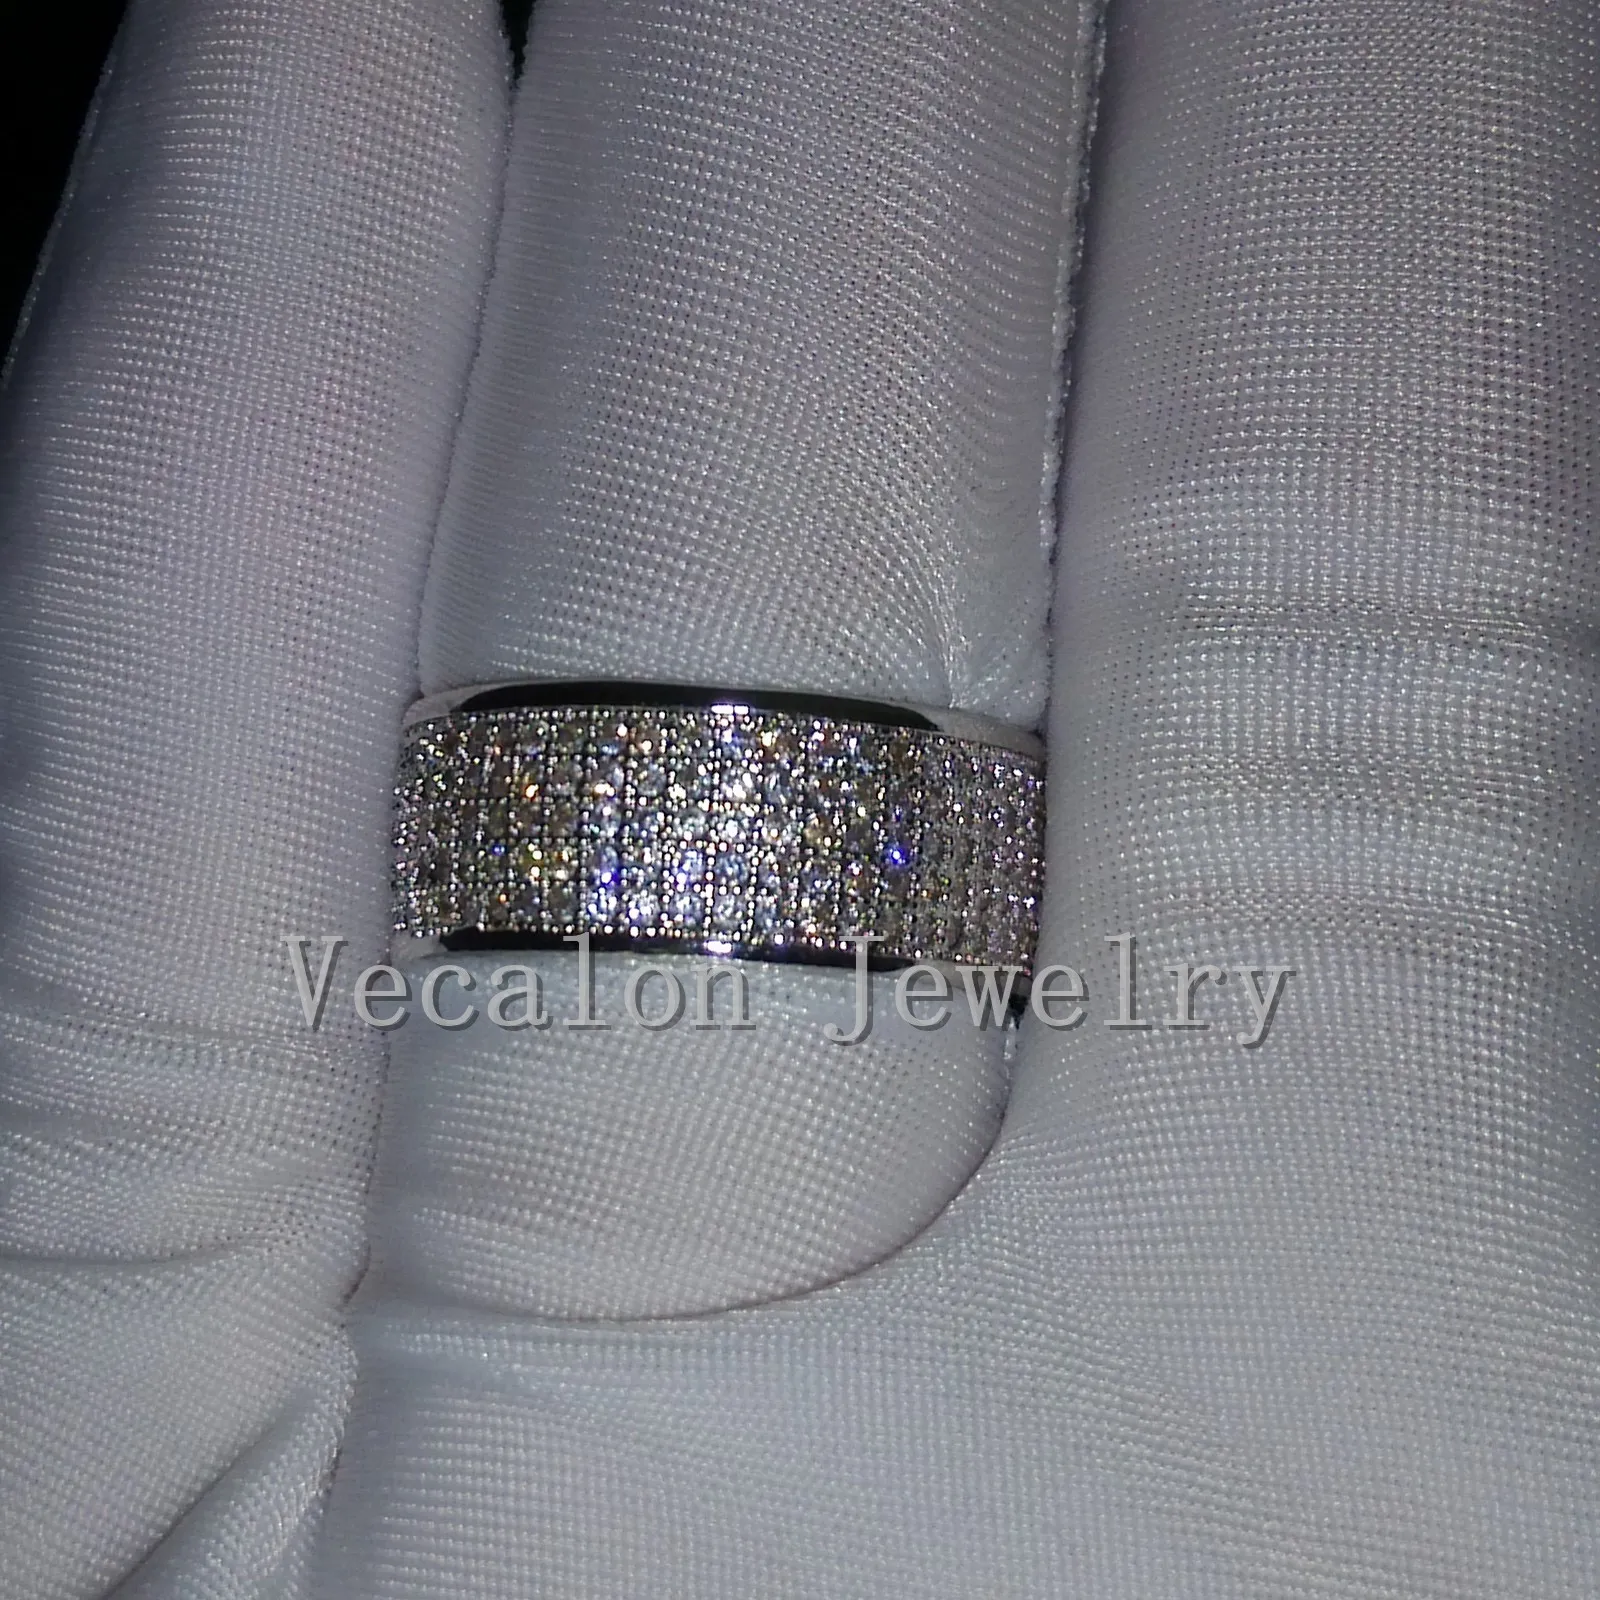 Vecalon Volledige 250 Stks Gesimuleerde Diamond CZ Wedding Band Ring voor Dames 10kt Wit Goud Gevuld Vrouwelijke Verlovingsband SZ 5-11